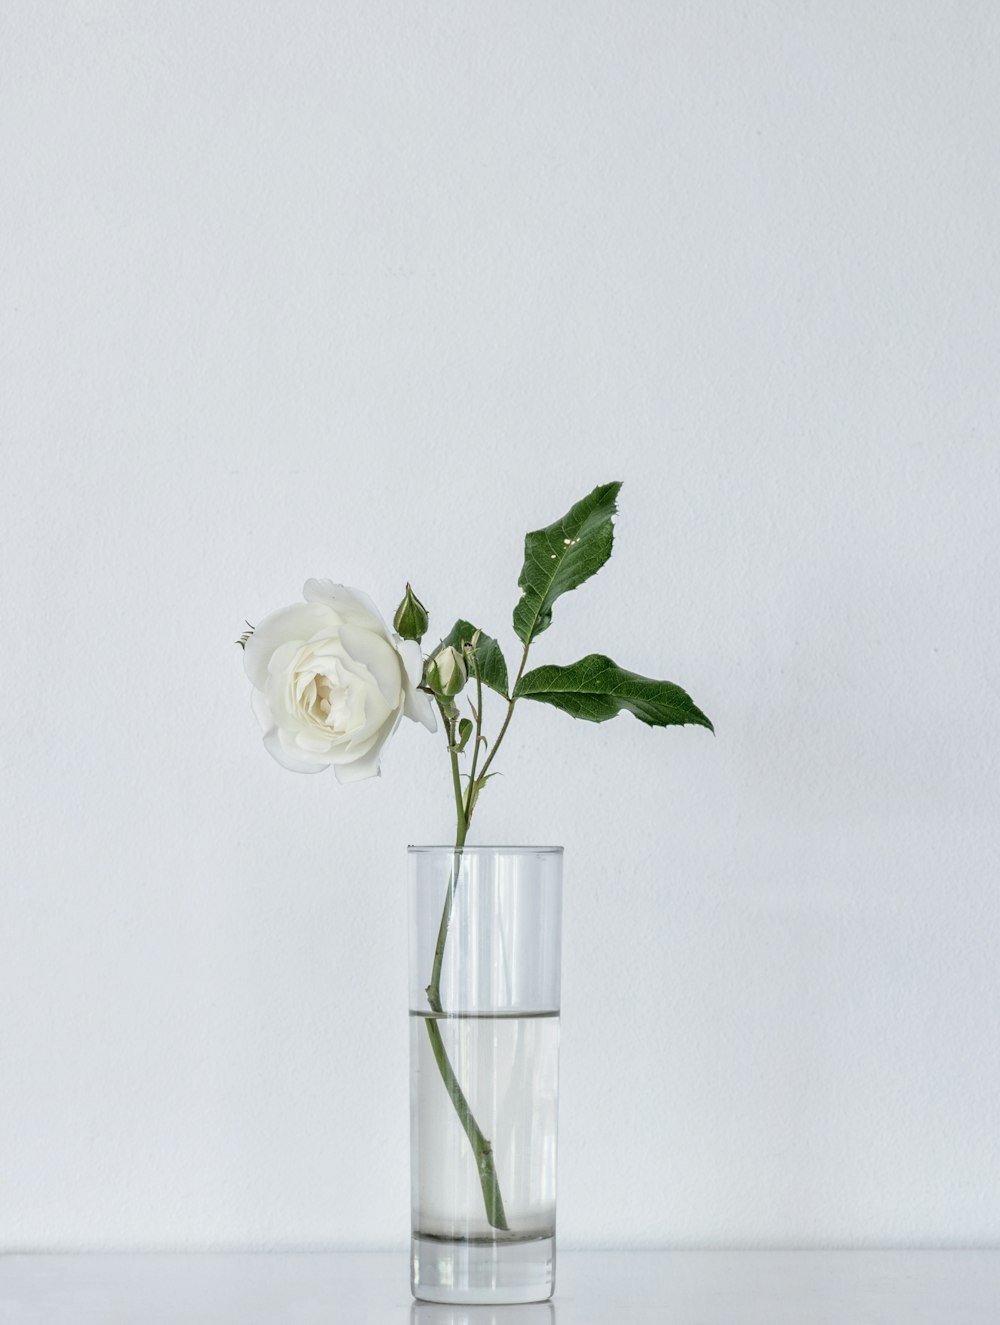 Rose blanche sur vase en verre